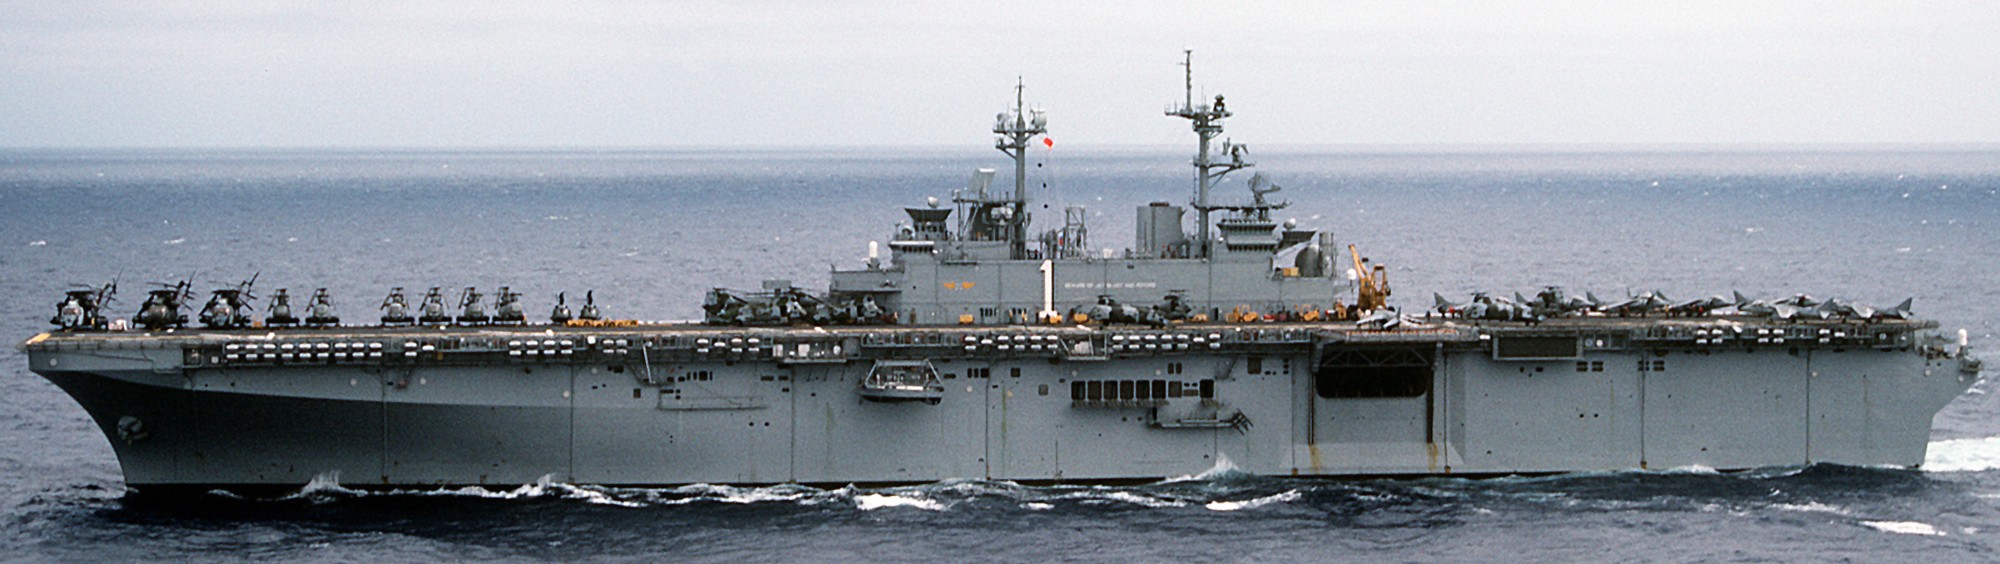 lhd-1 uss wasp amphibious assault landing ship dock helicopter us navy 70